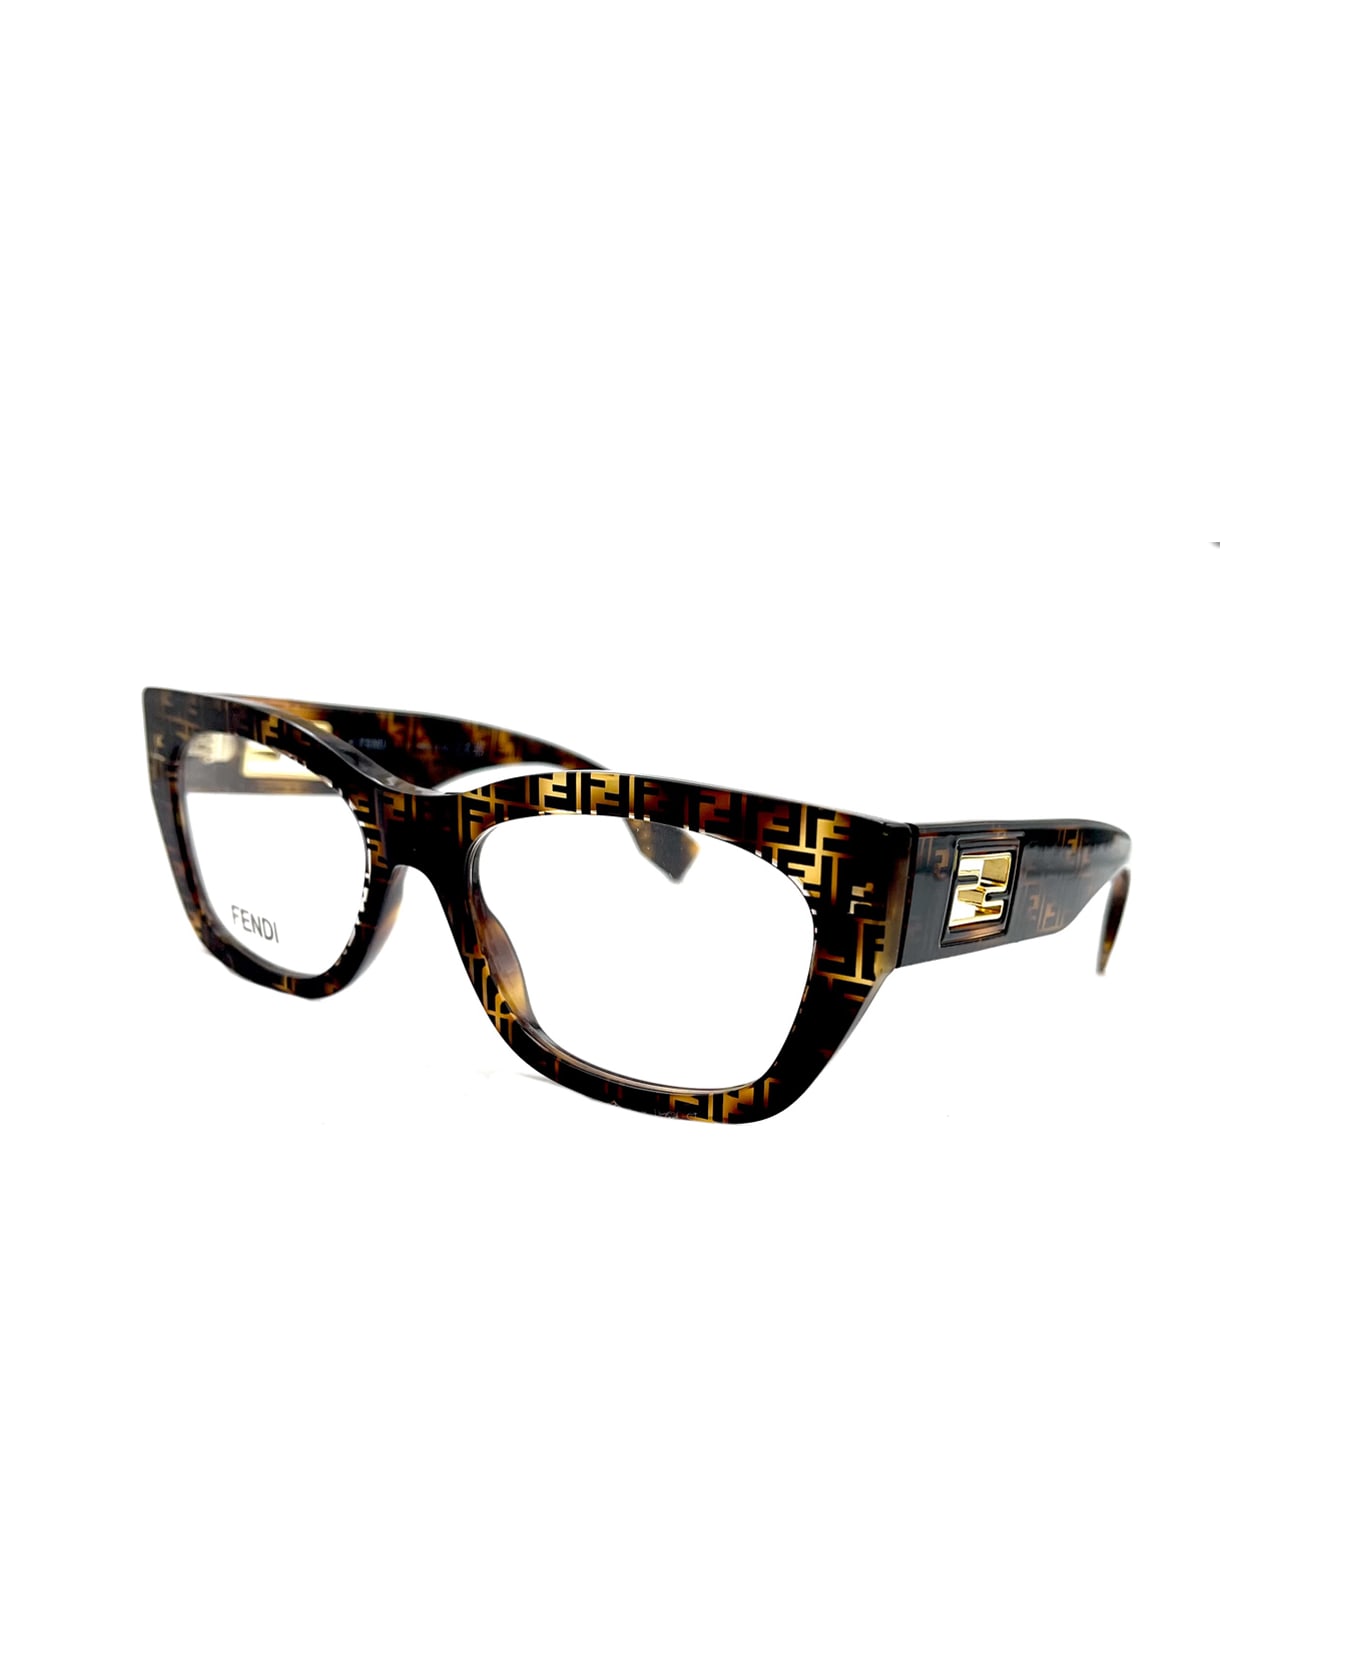 Fendi Eyewear Fe50082i 055 Glasses - Marrone